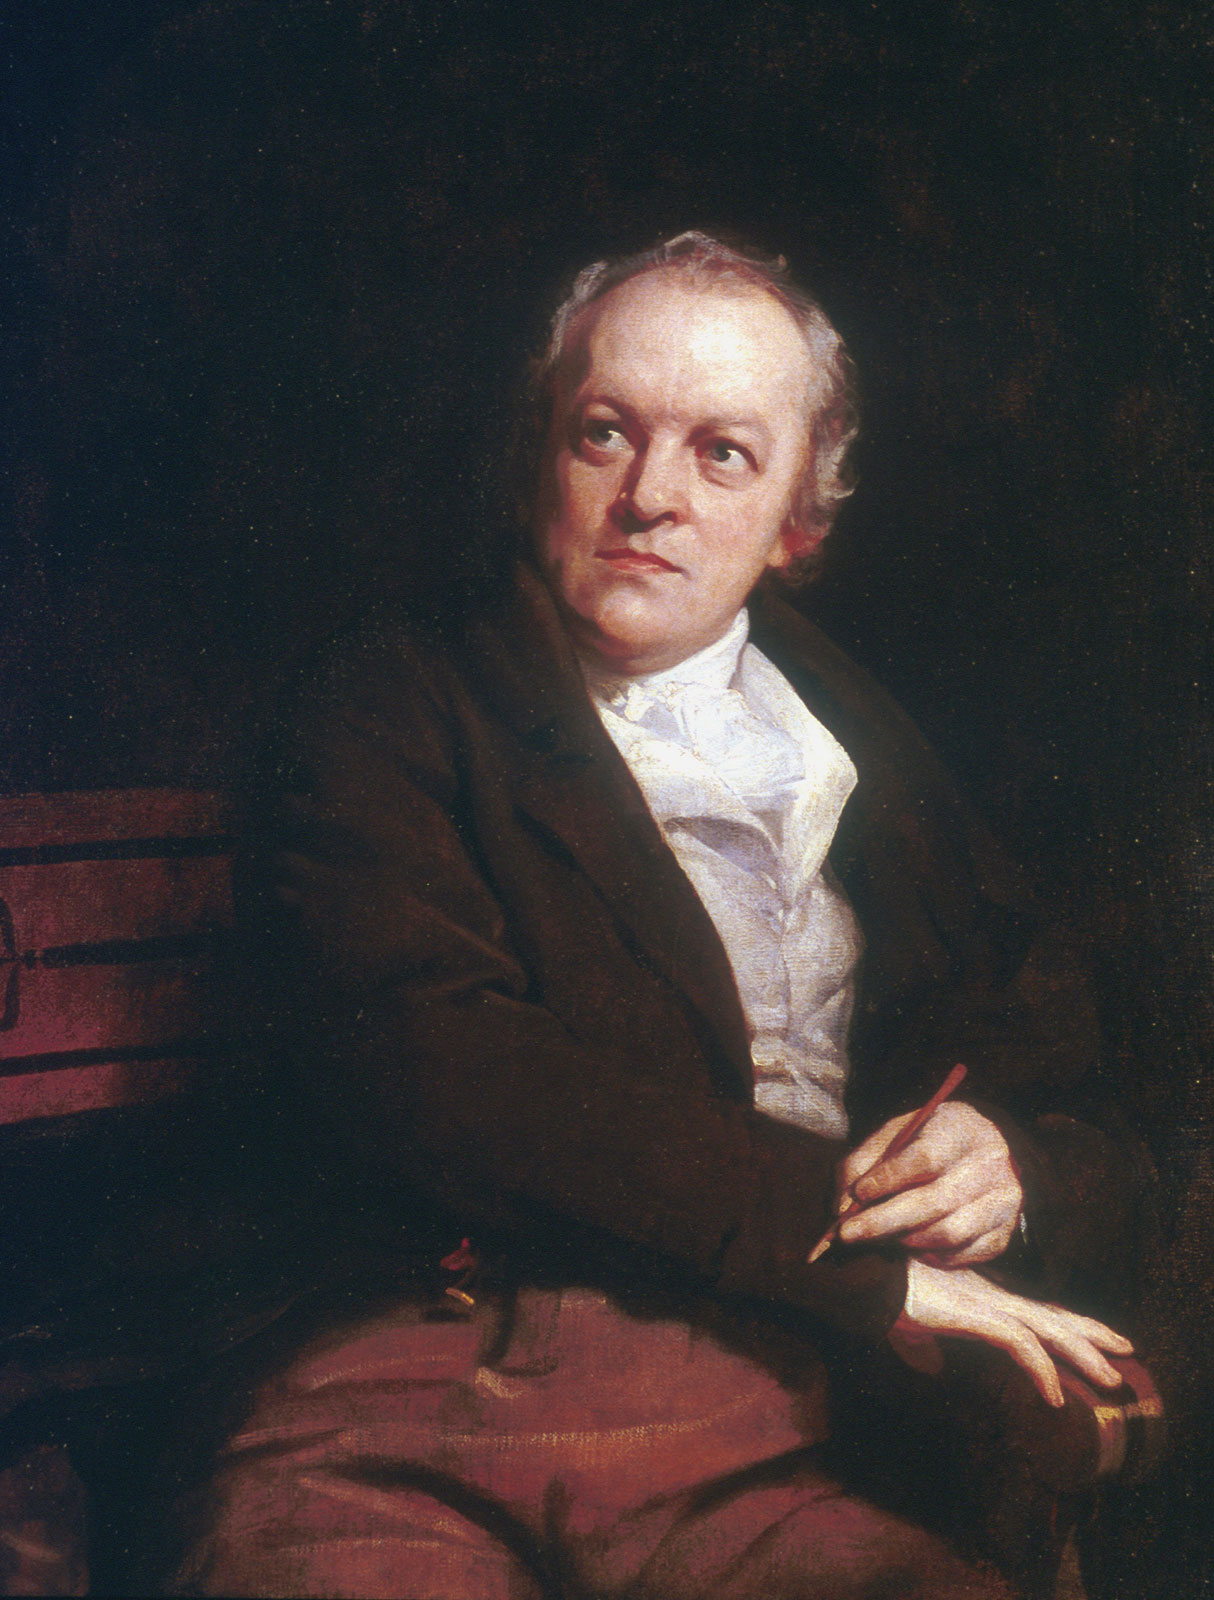 William-Blake-oil-canvas-Thomas-Phillips-National-1807